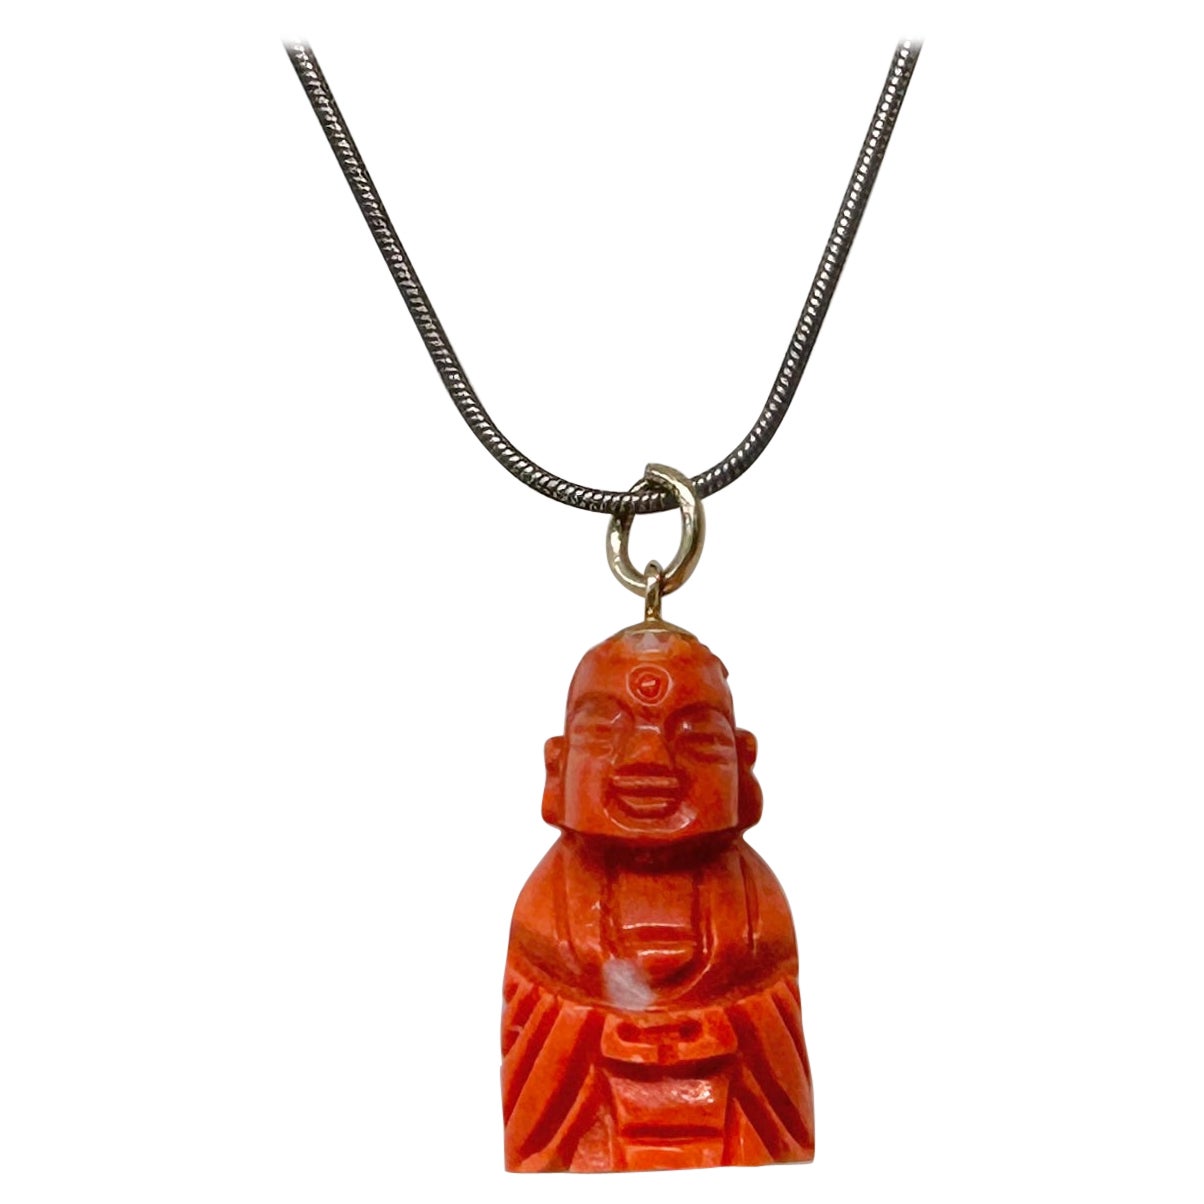 Collier pendentif Bouddha Art déco ancien en corail et or 14 carats avec breloque Momo Coral